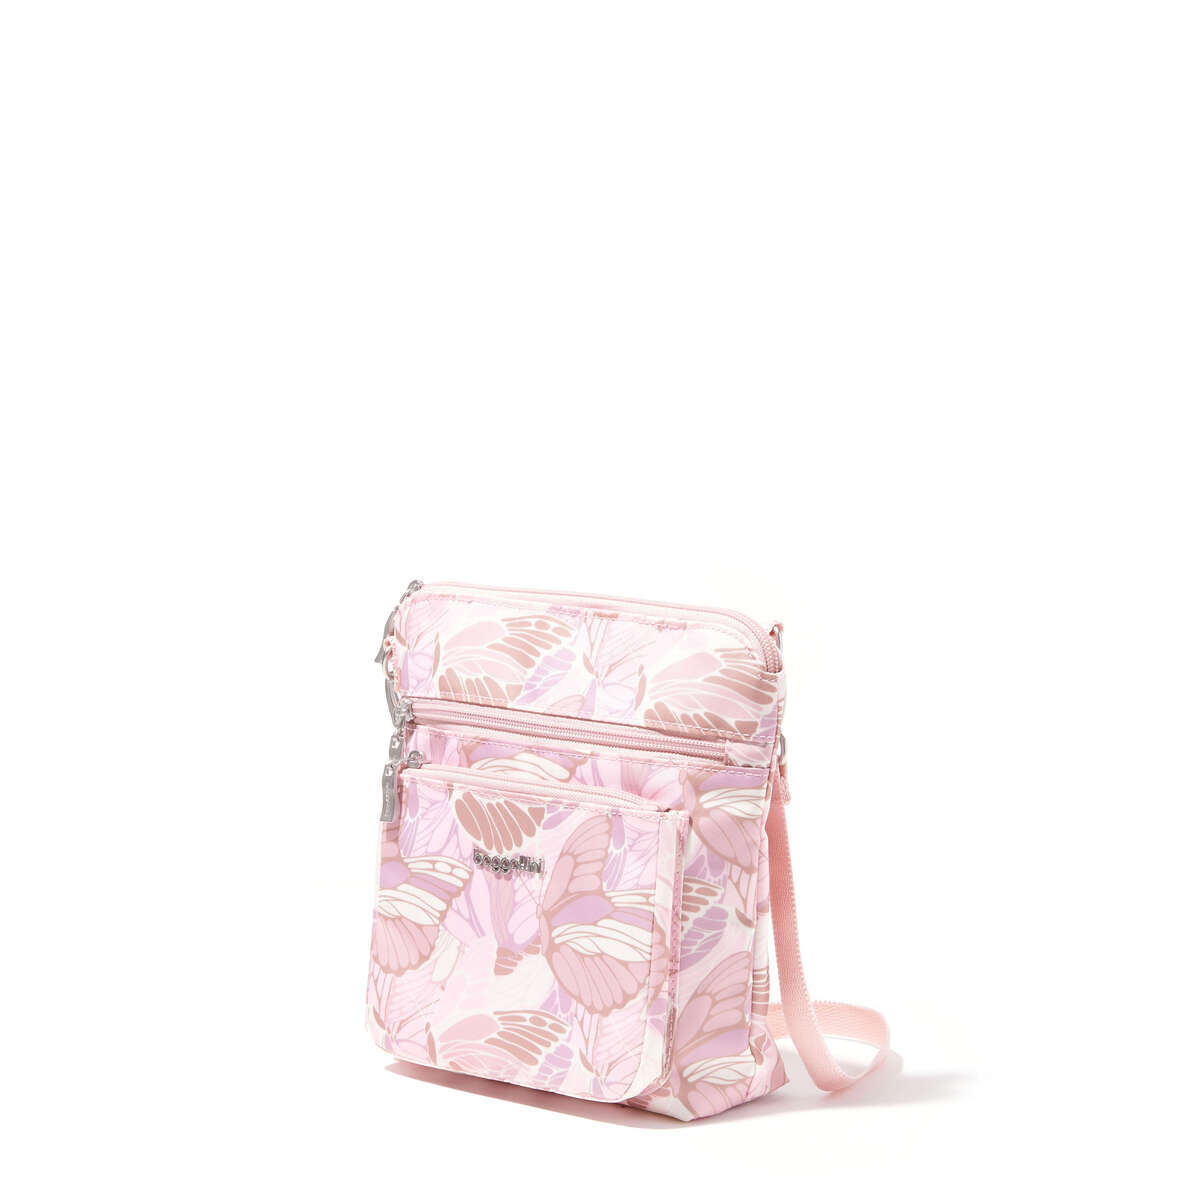 Baggallini Modern Pocket Cross - Pink Butterfly